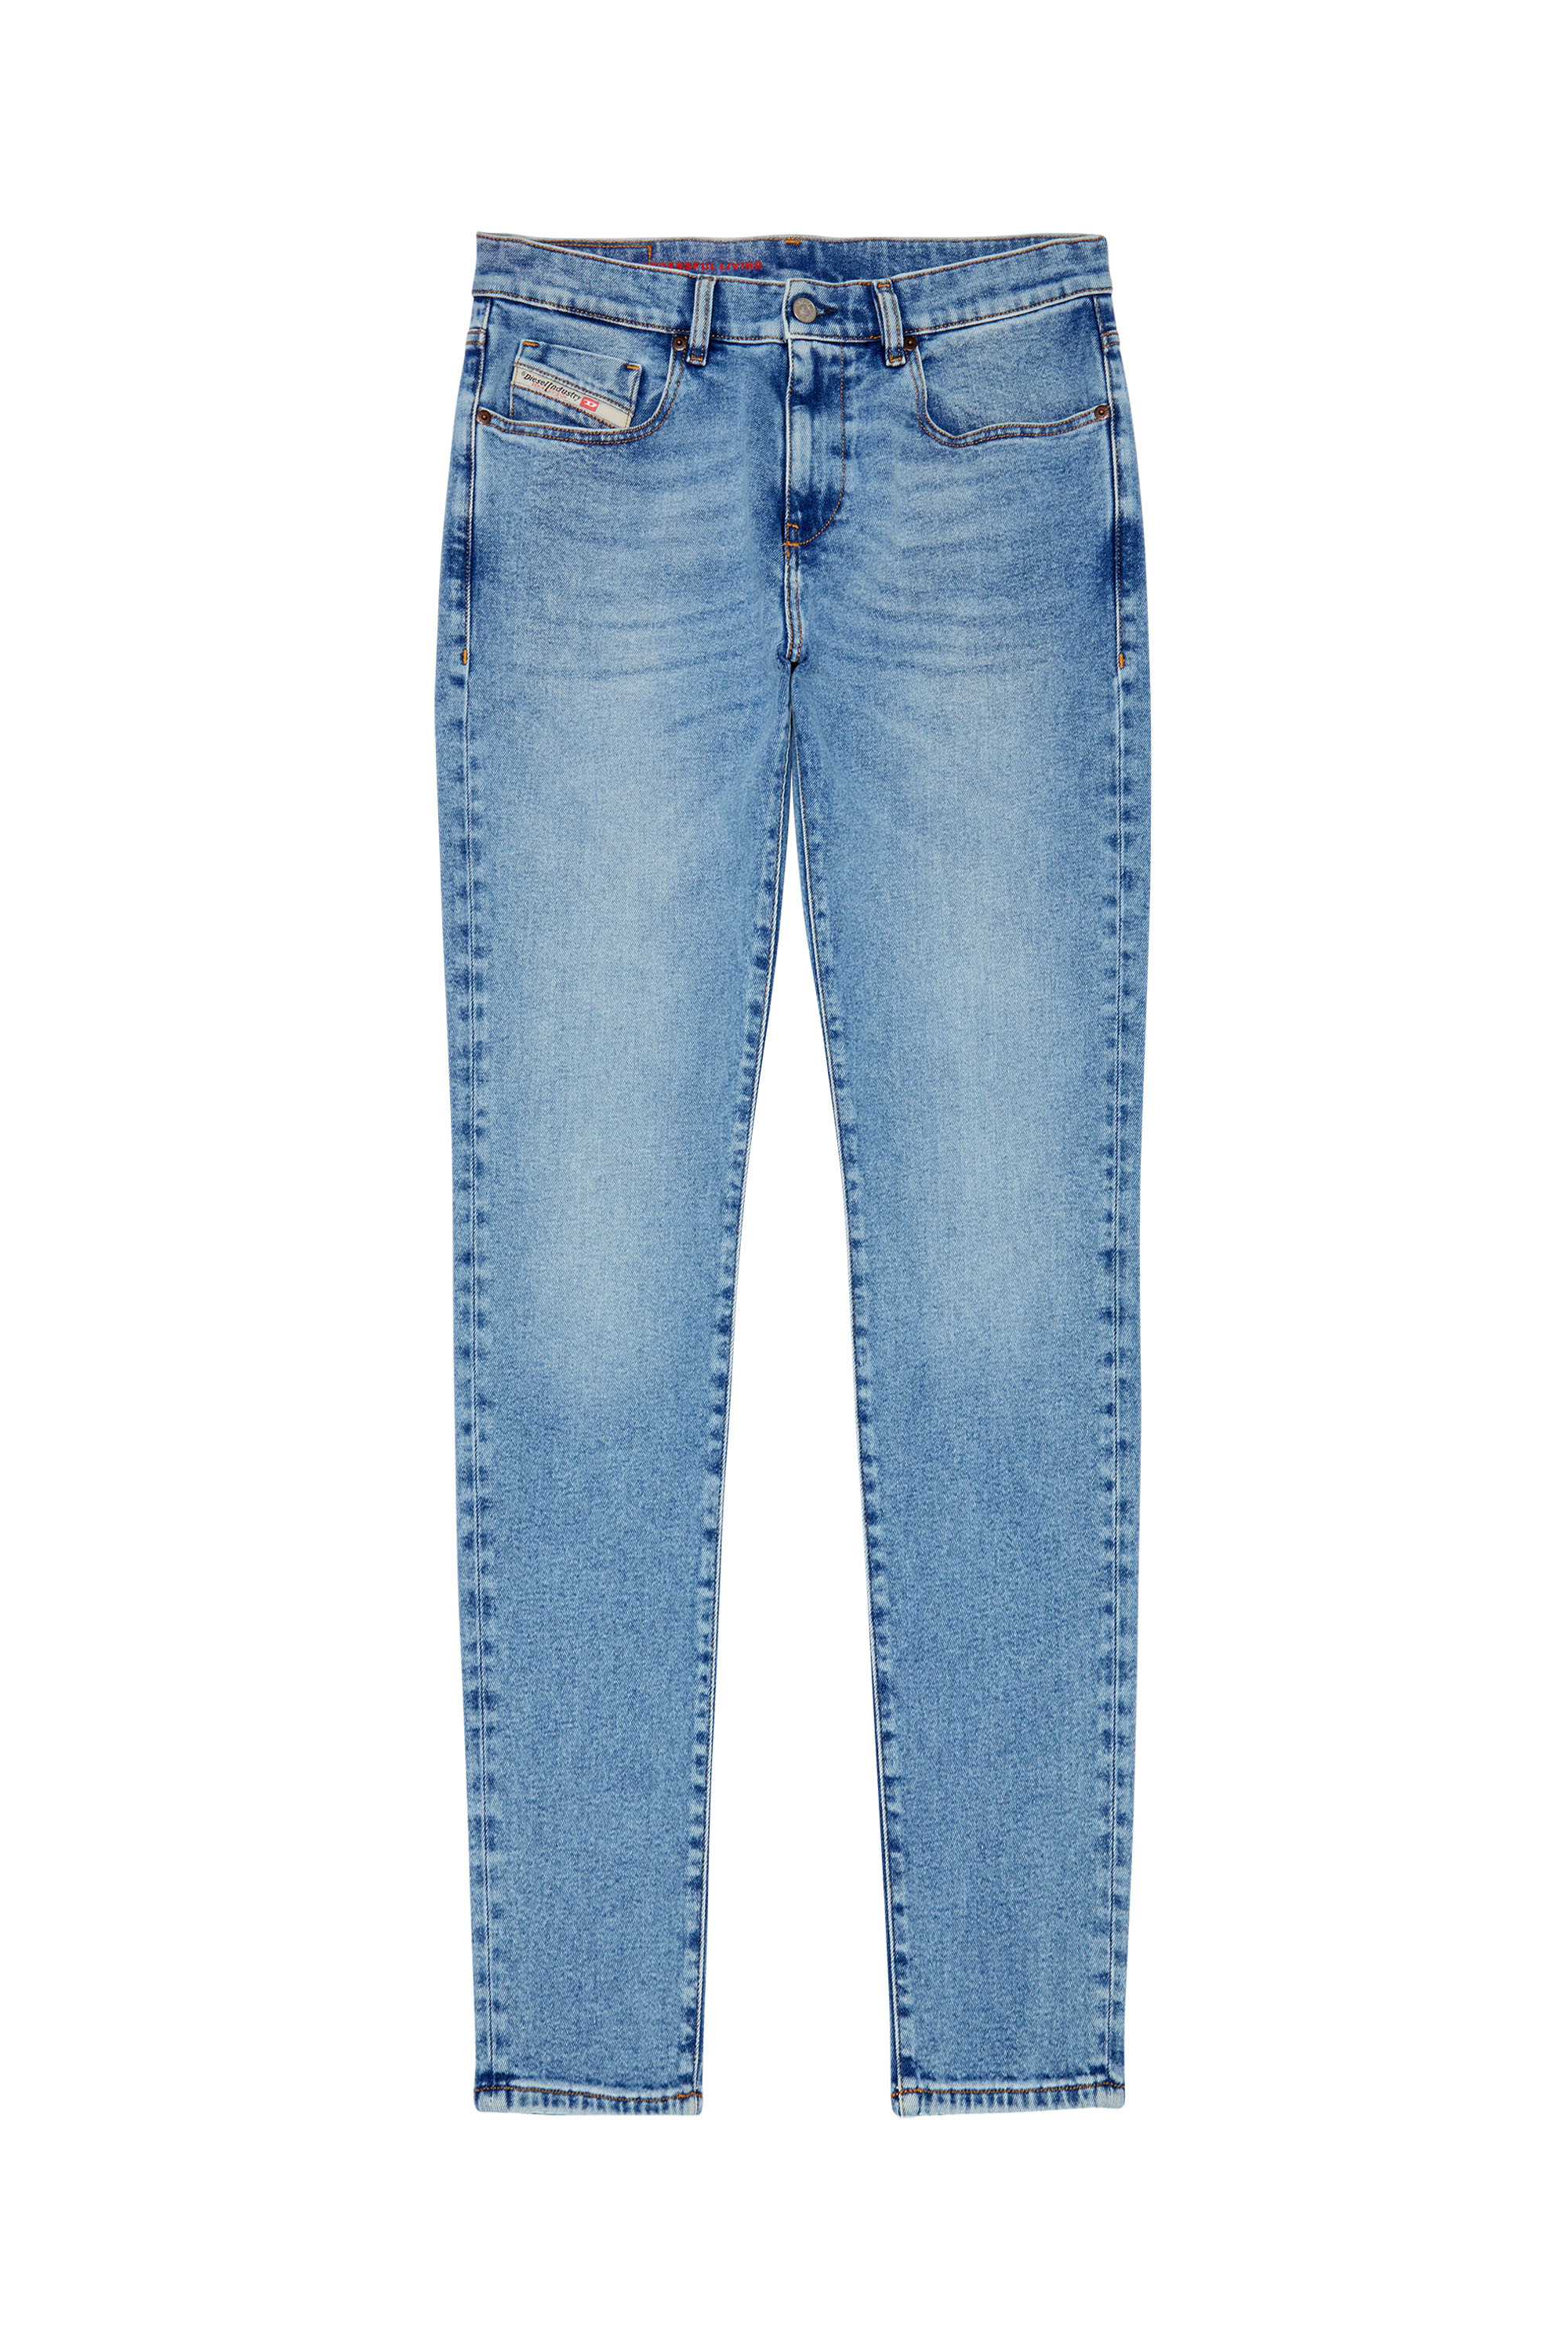 2019 D-STRUKT 09B92 Slim Jeans, Light Blue - Jeans